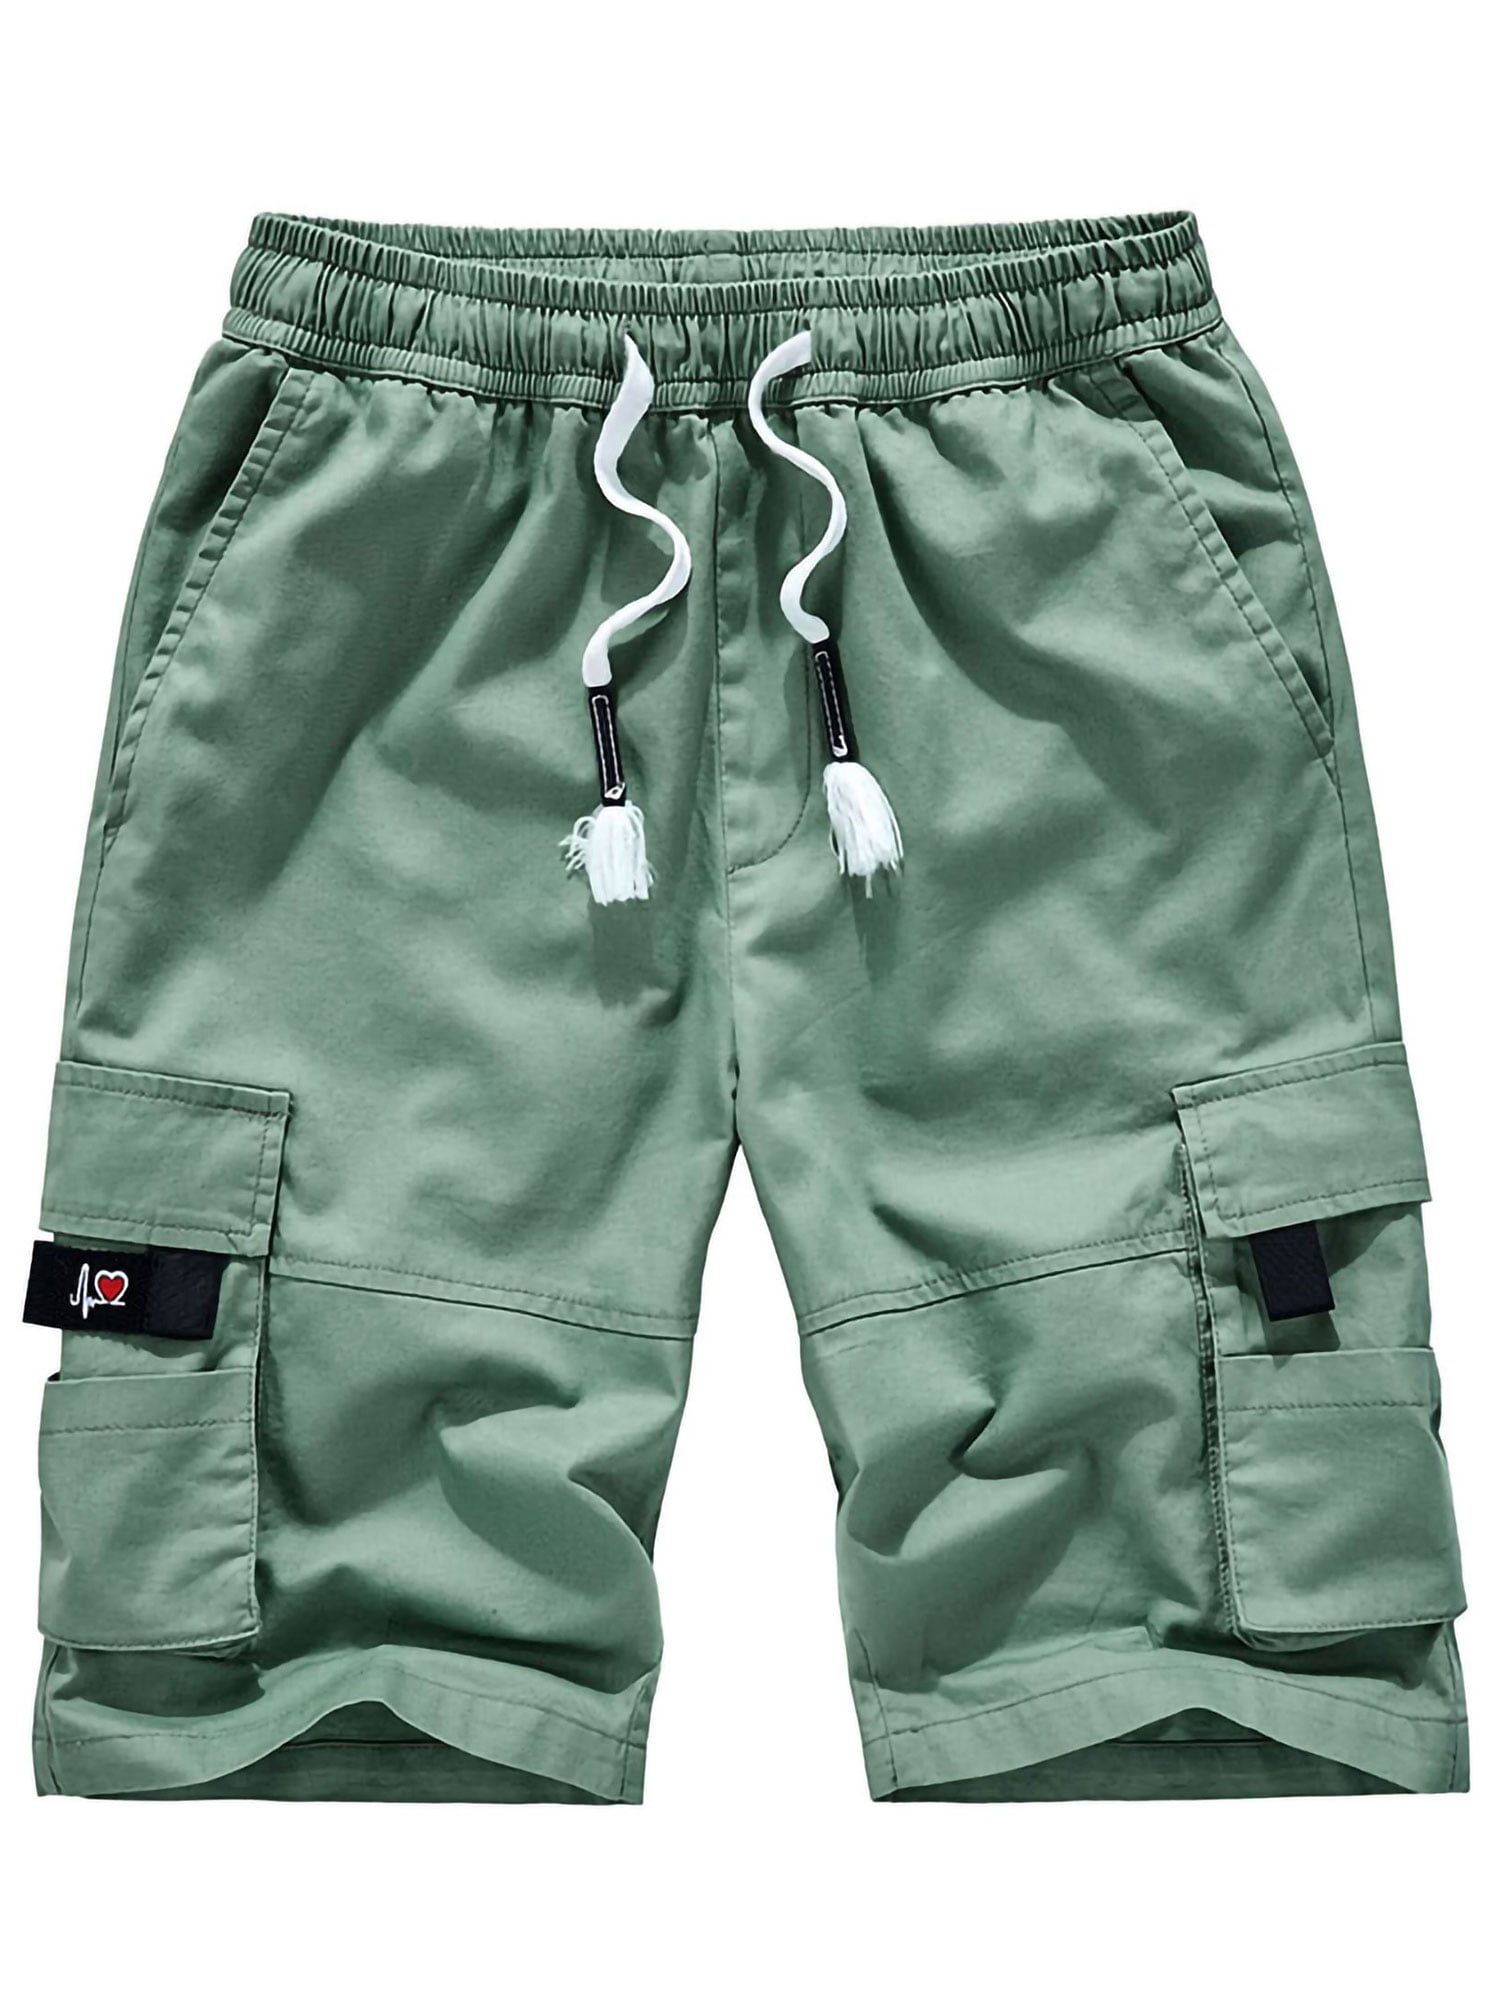 APTRO Mens Cargo Shorts Casual Shorts Cotton Combat Elastic Shorts with Multi Pockets 